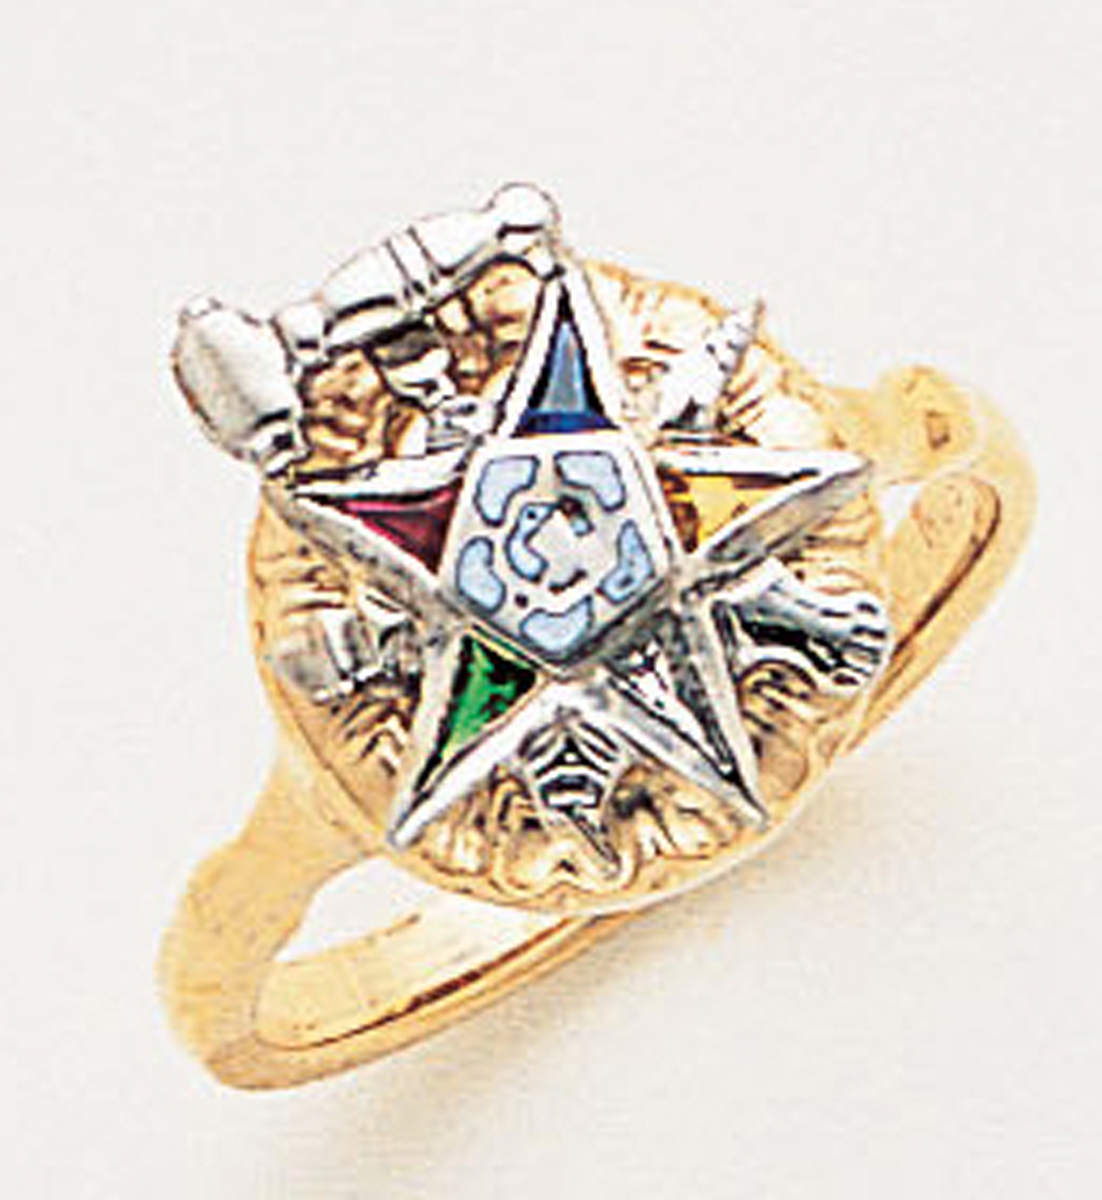 Gold Past Master Freemason Ring / Masonic Ring - Gold Plated and Steel  Color Top - with Masonic Symbols - Mason Zone